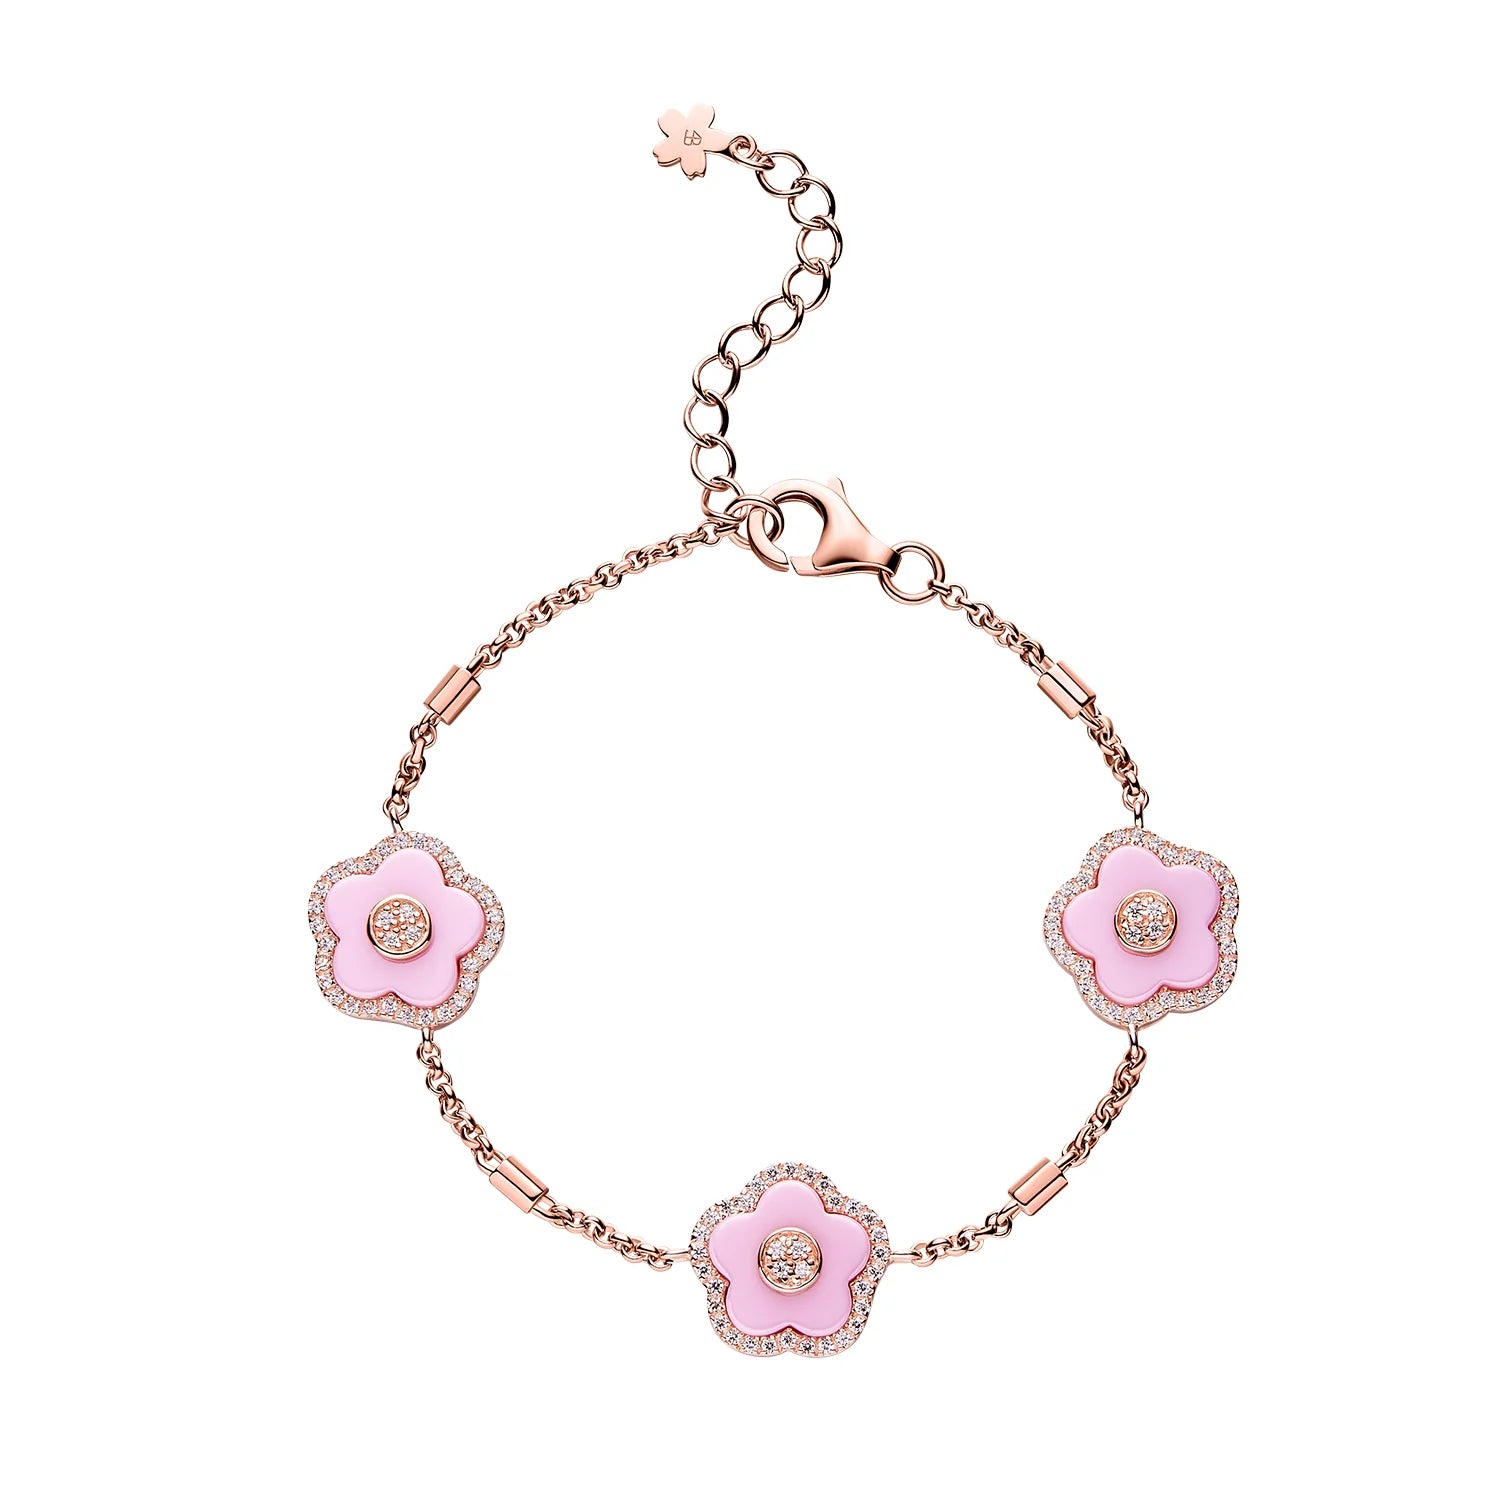 Pink Cherry Blossom Watch With Flower Ceramic Bracelet